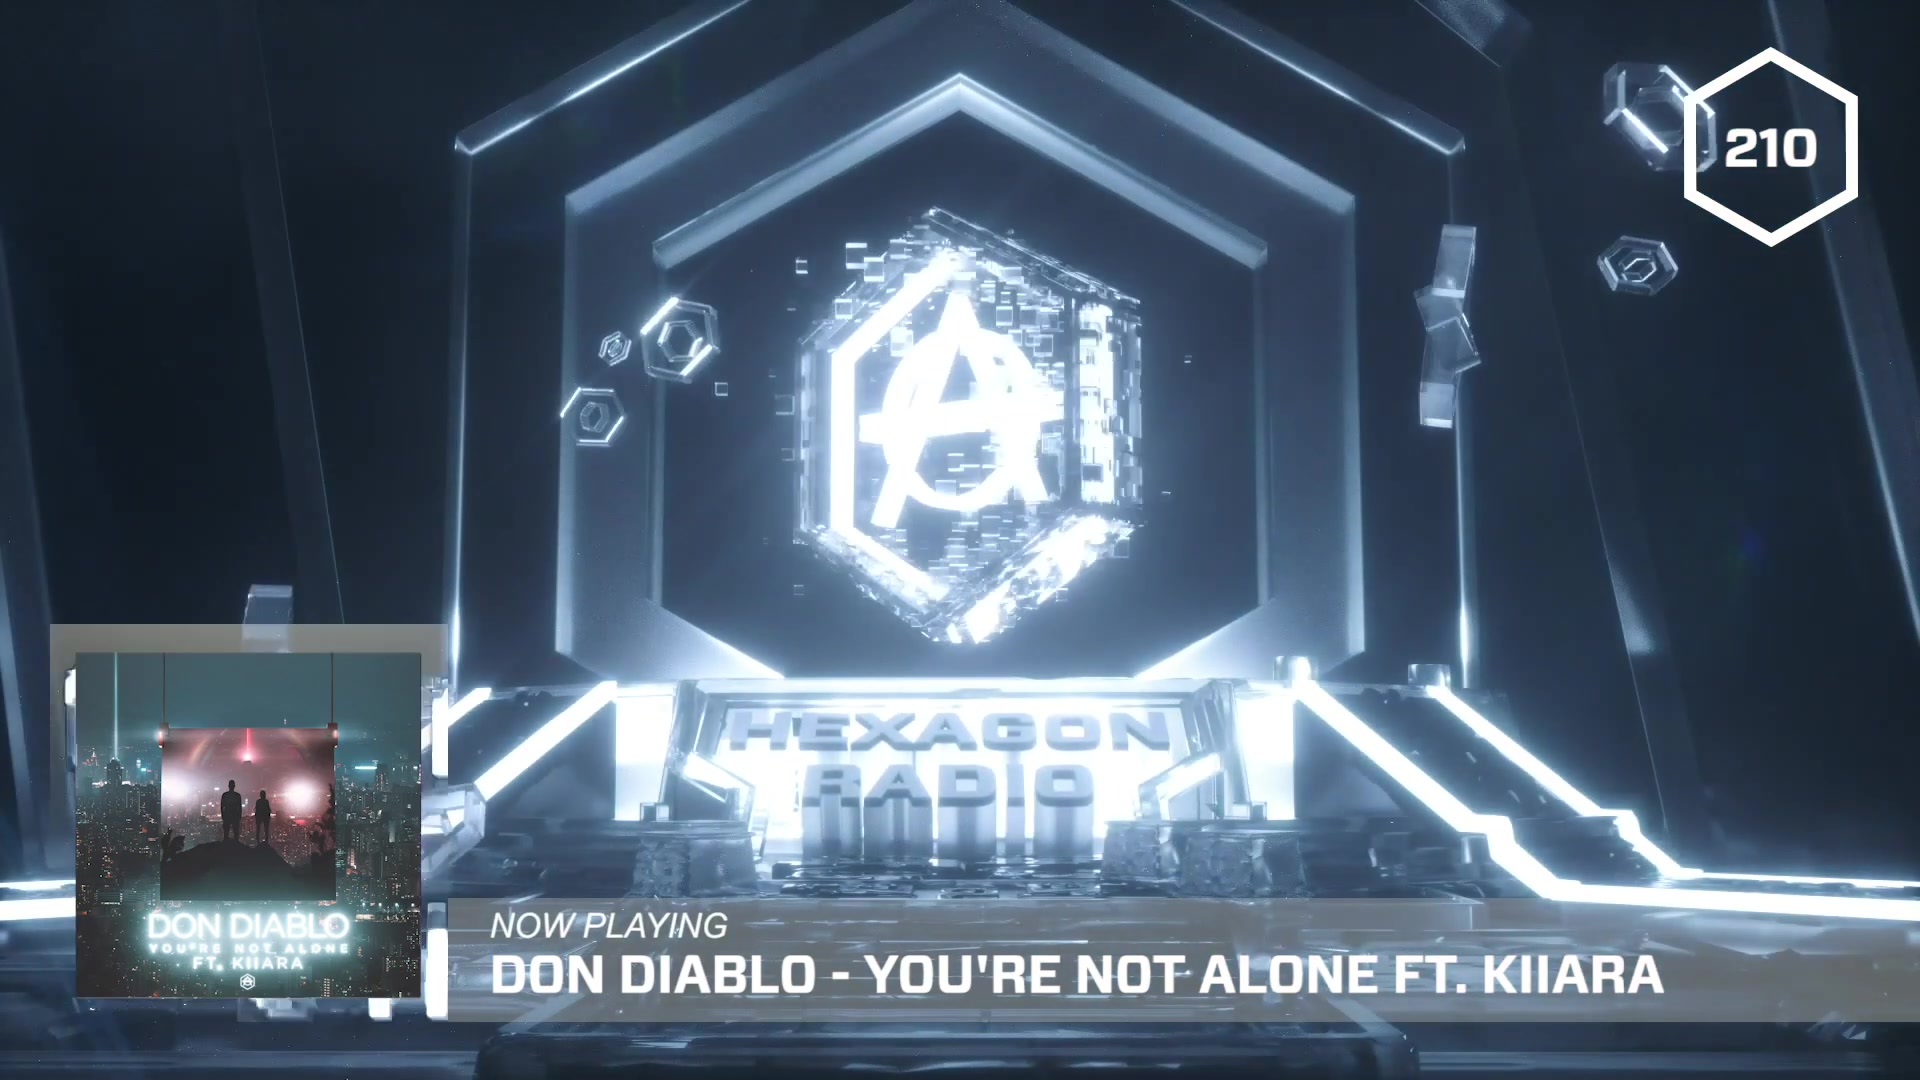 Don Diablo Hexagon Radio Episode 210